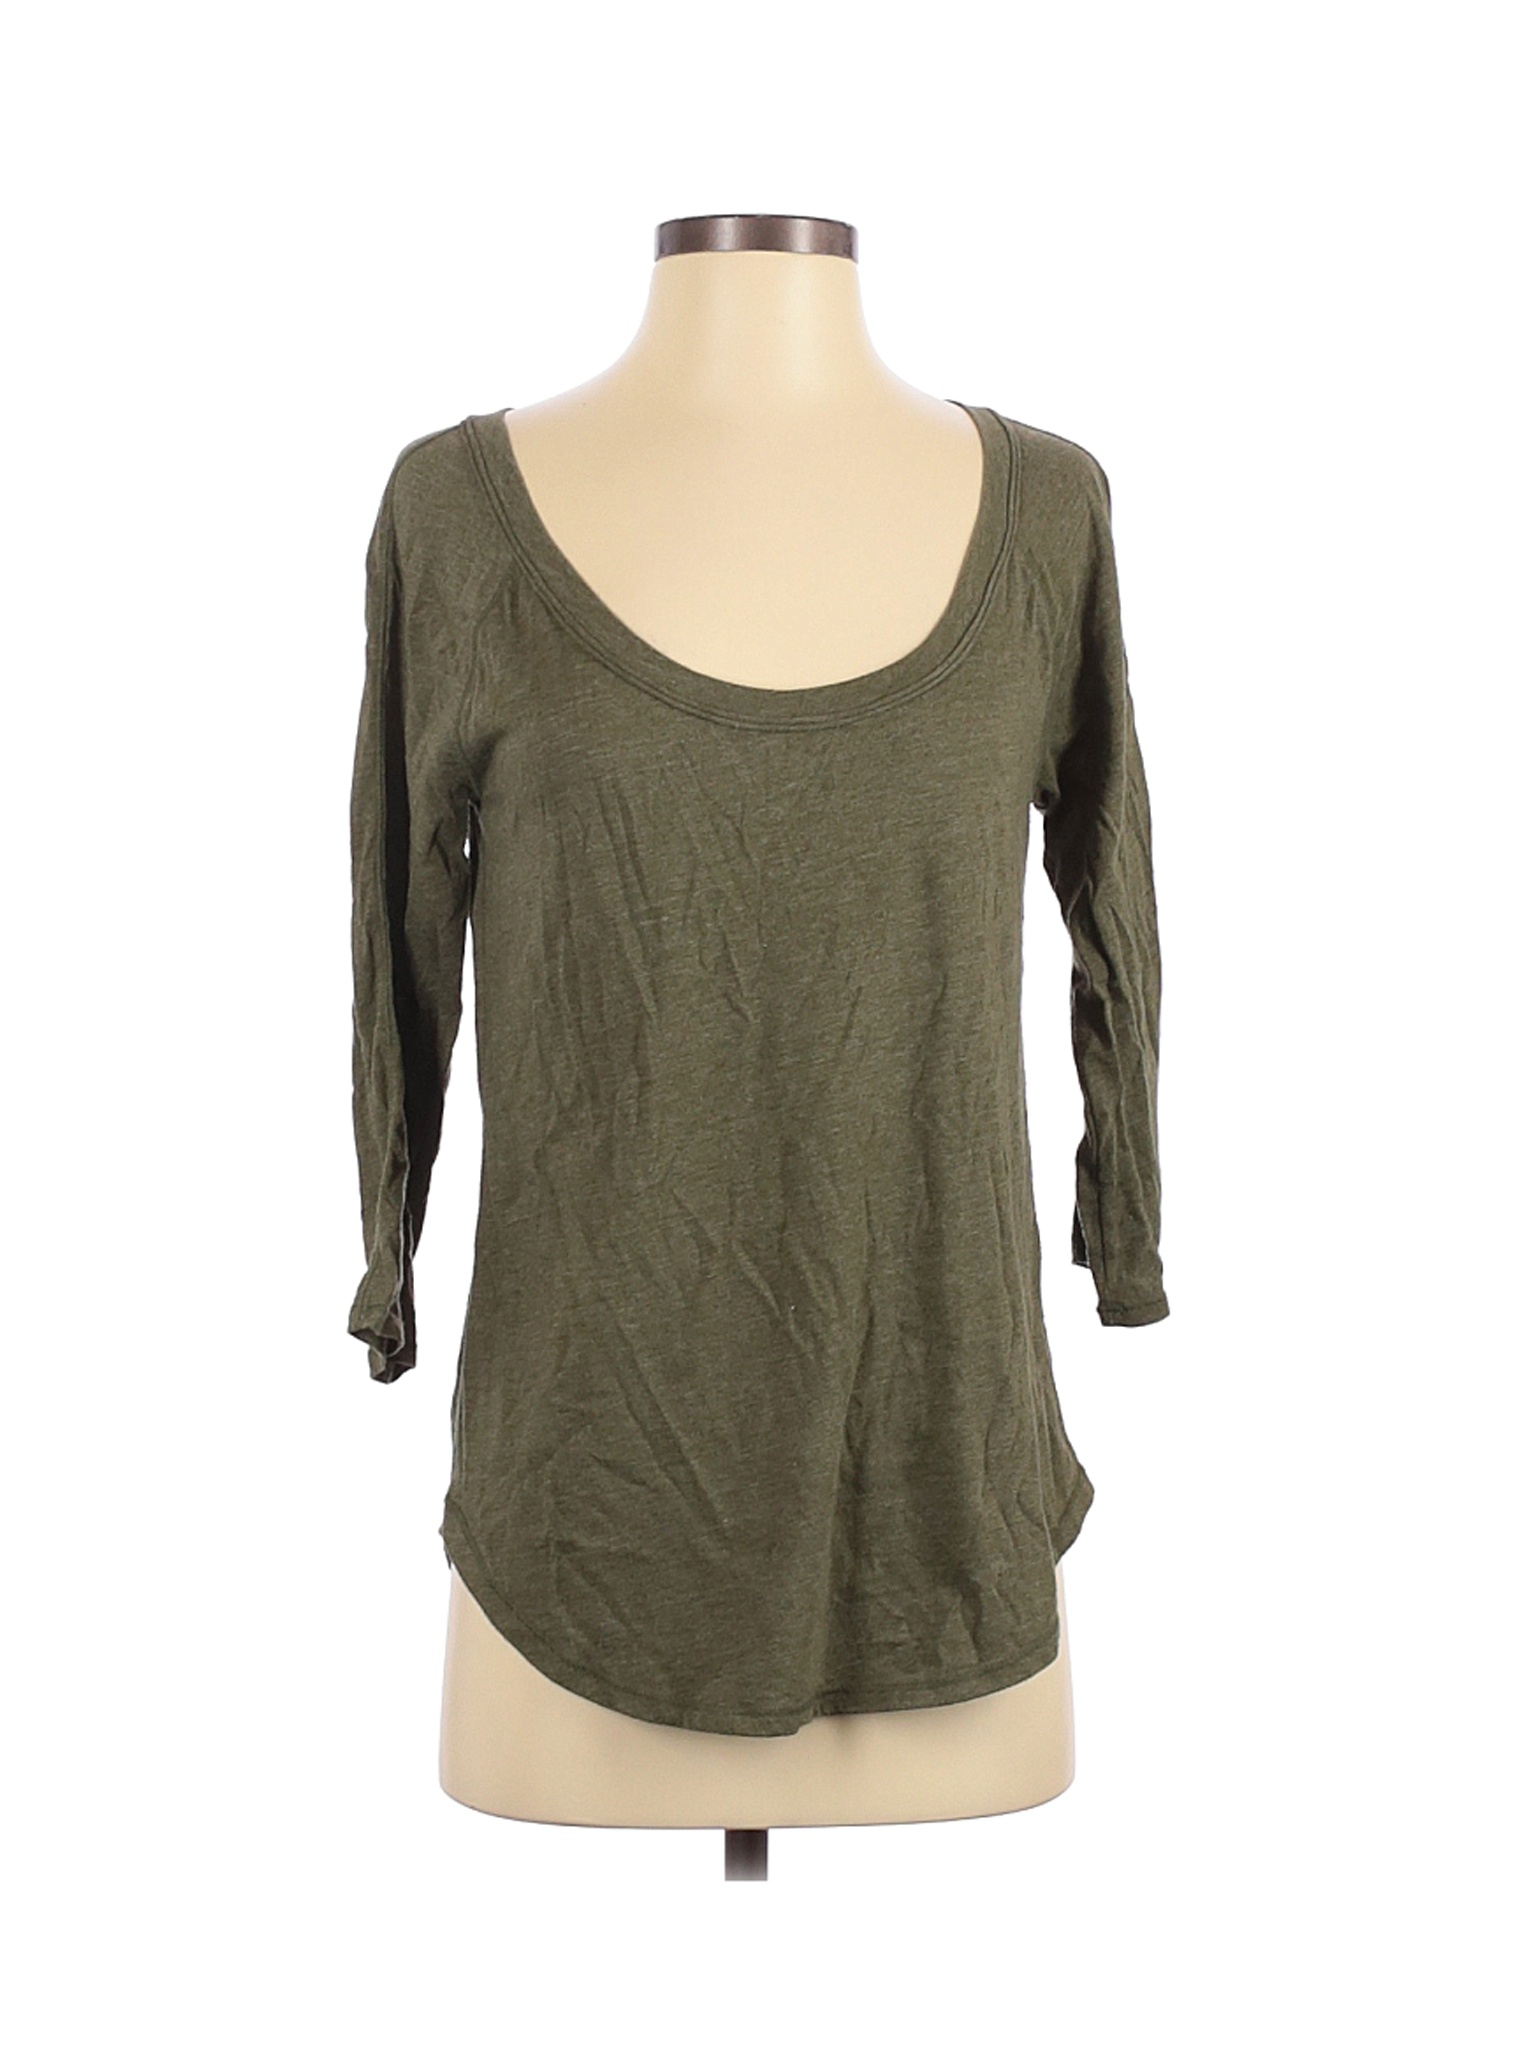 Melrose and Market Women Green 3/4 Sleeve T-Shirt S | eBay